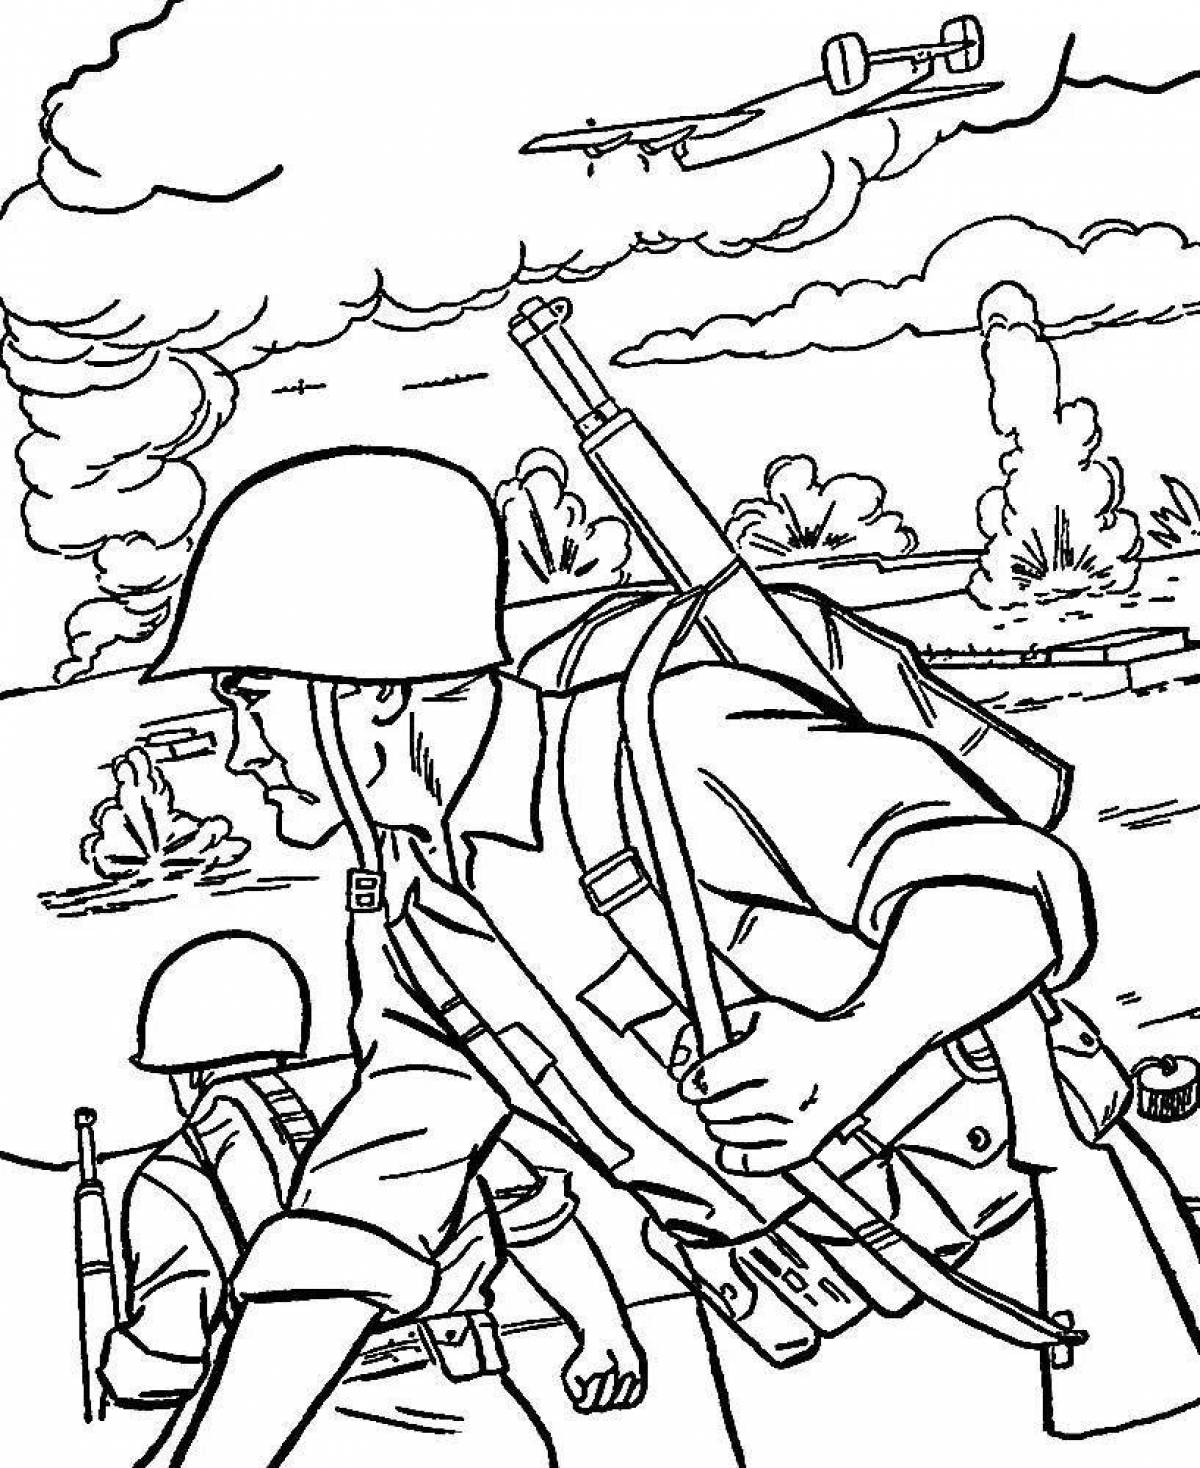 Military drawings #8